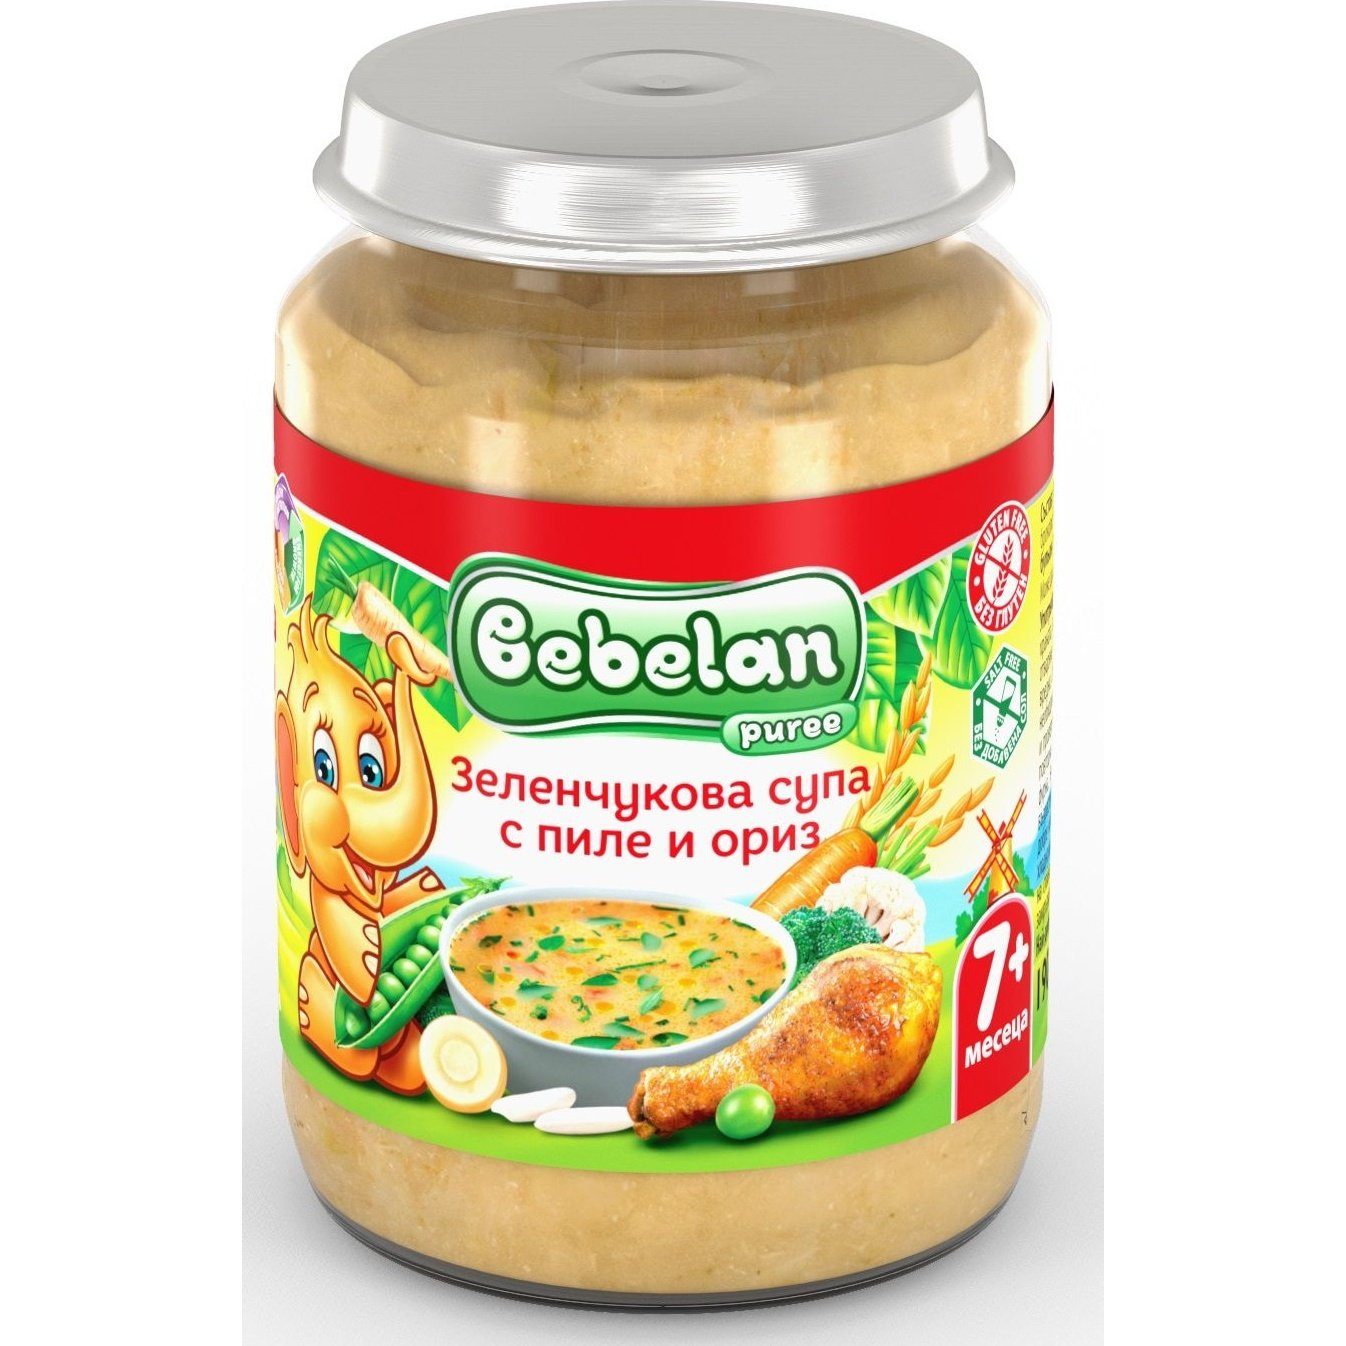 Bebelan Puree Бебешко ястие - Зеленчукова супа с пиле и ориз, 190 g valinokids